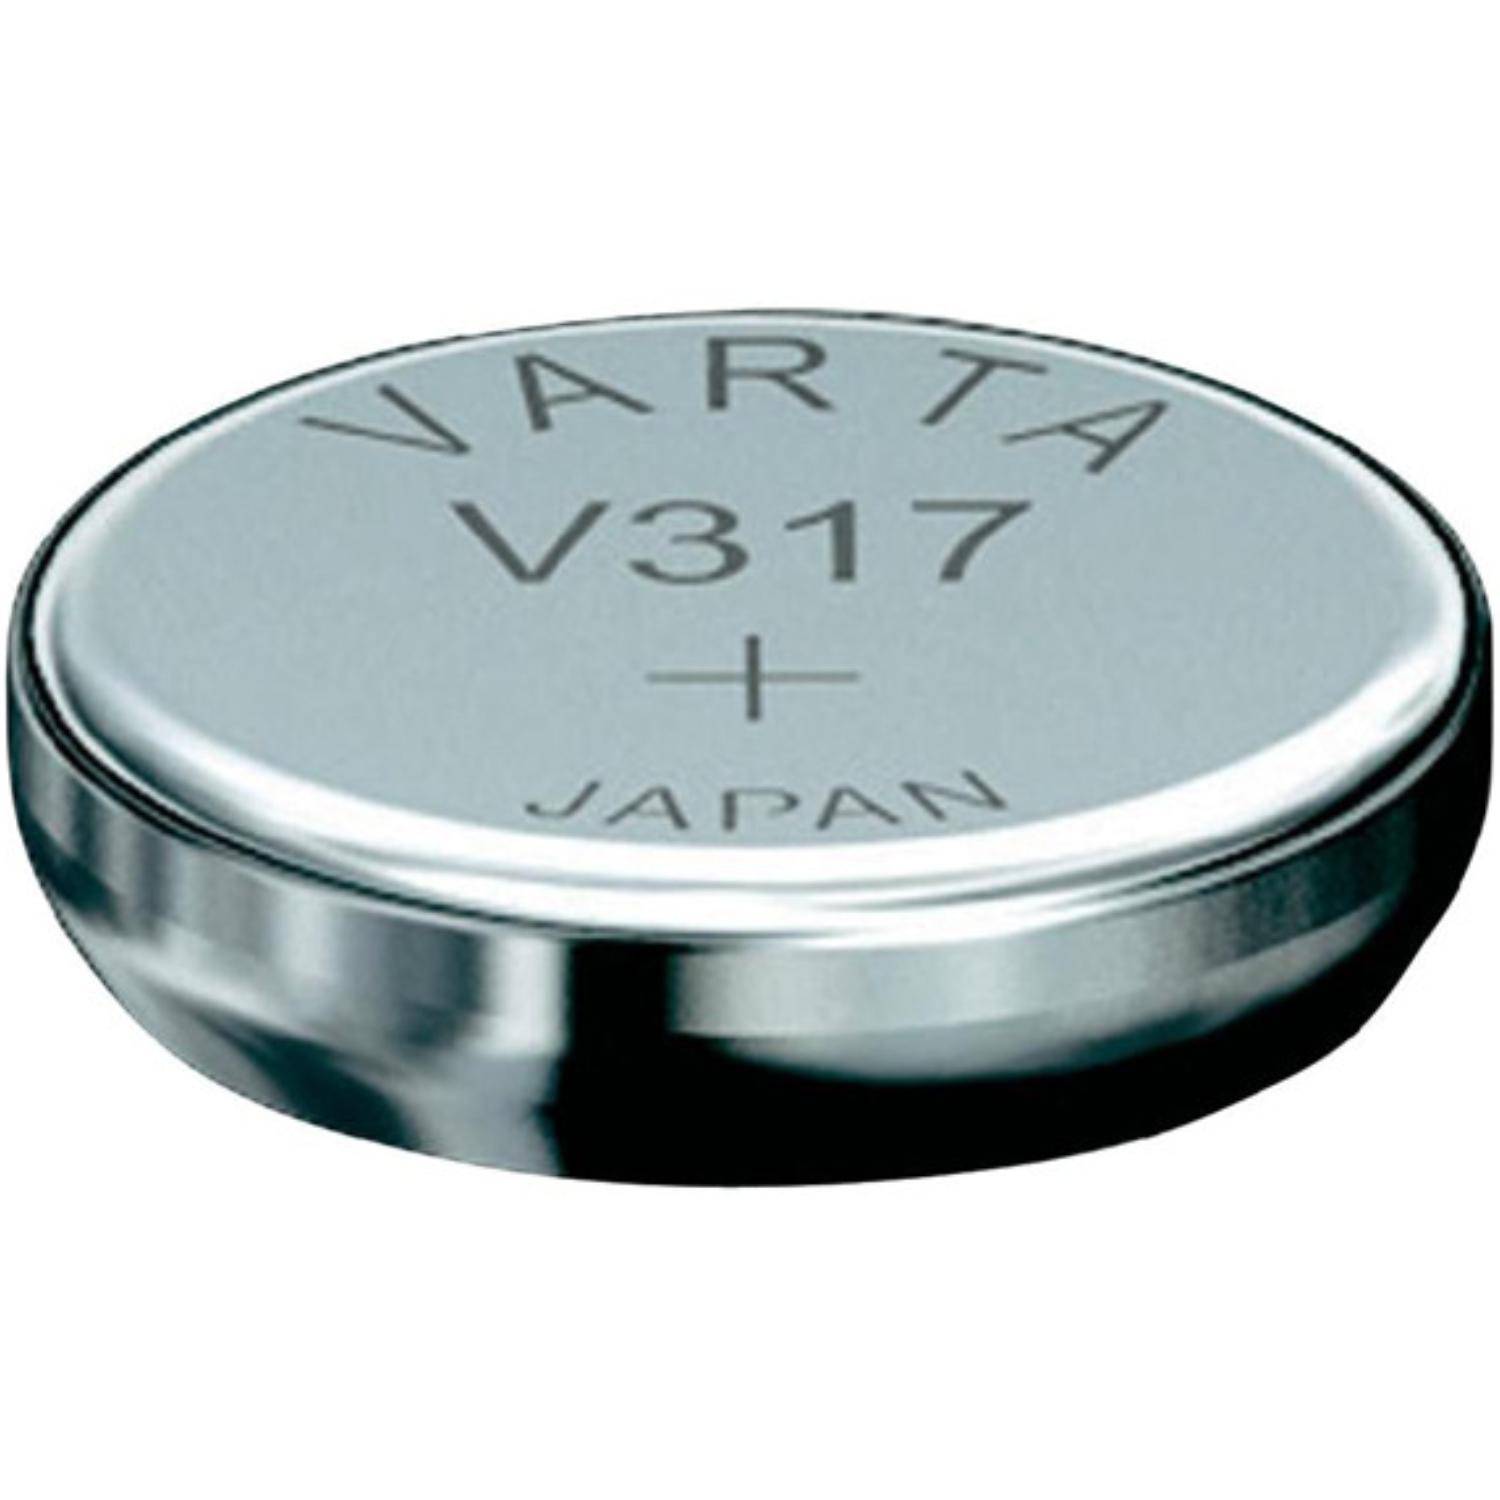 Image of Horlogebatterij 1.55v-8mah 317.801.111 (1st/bl)